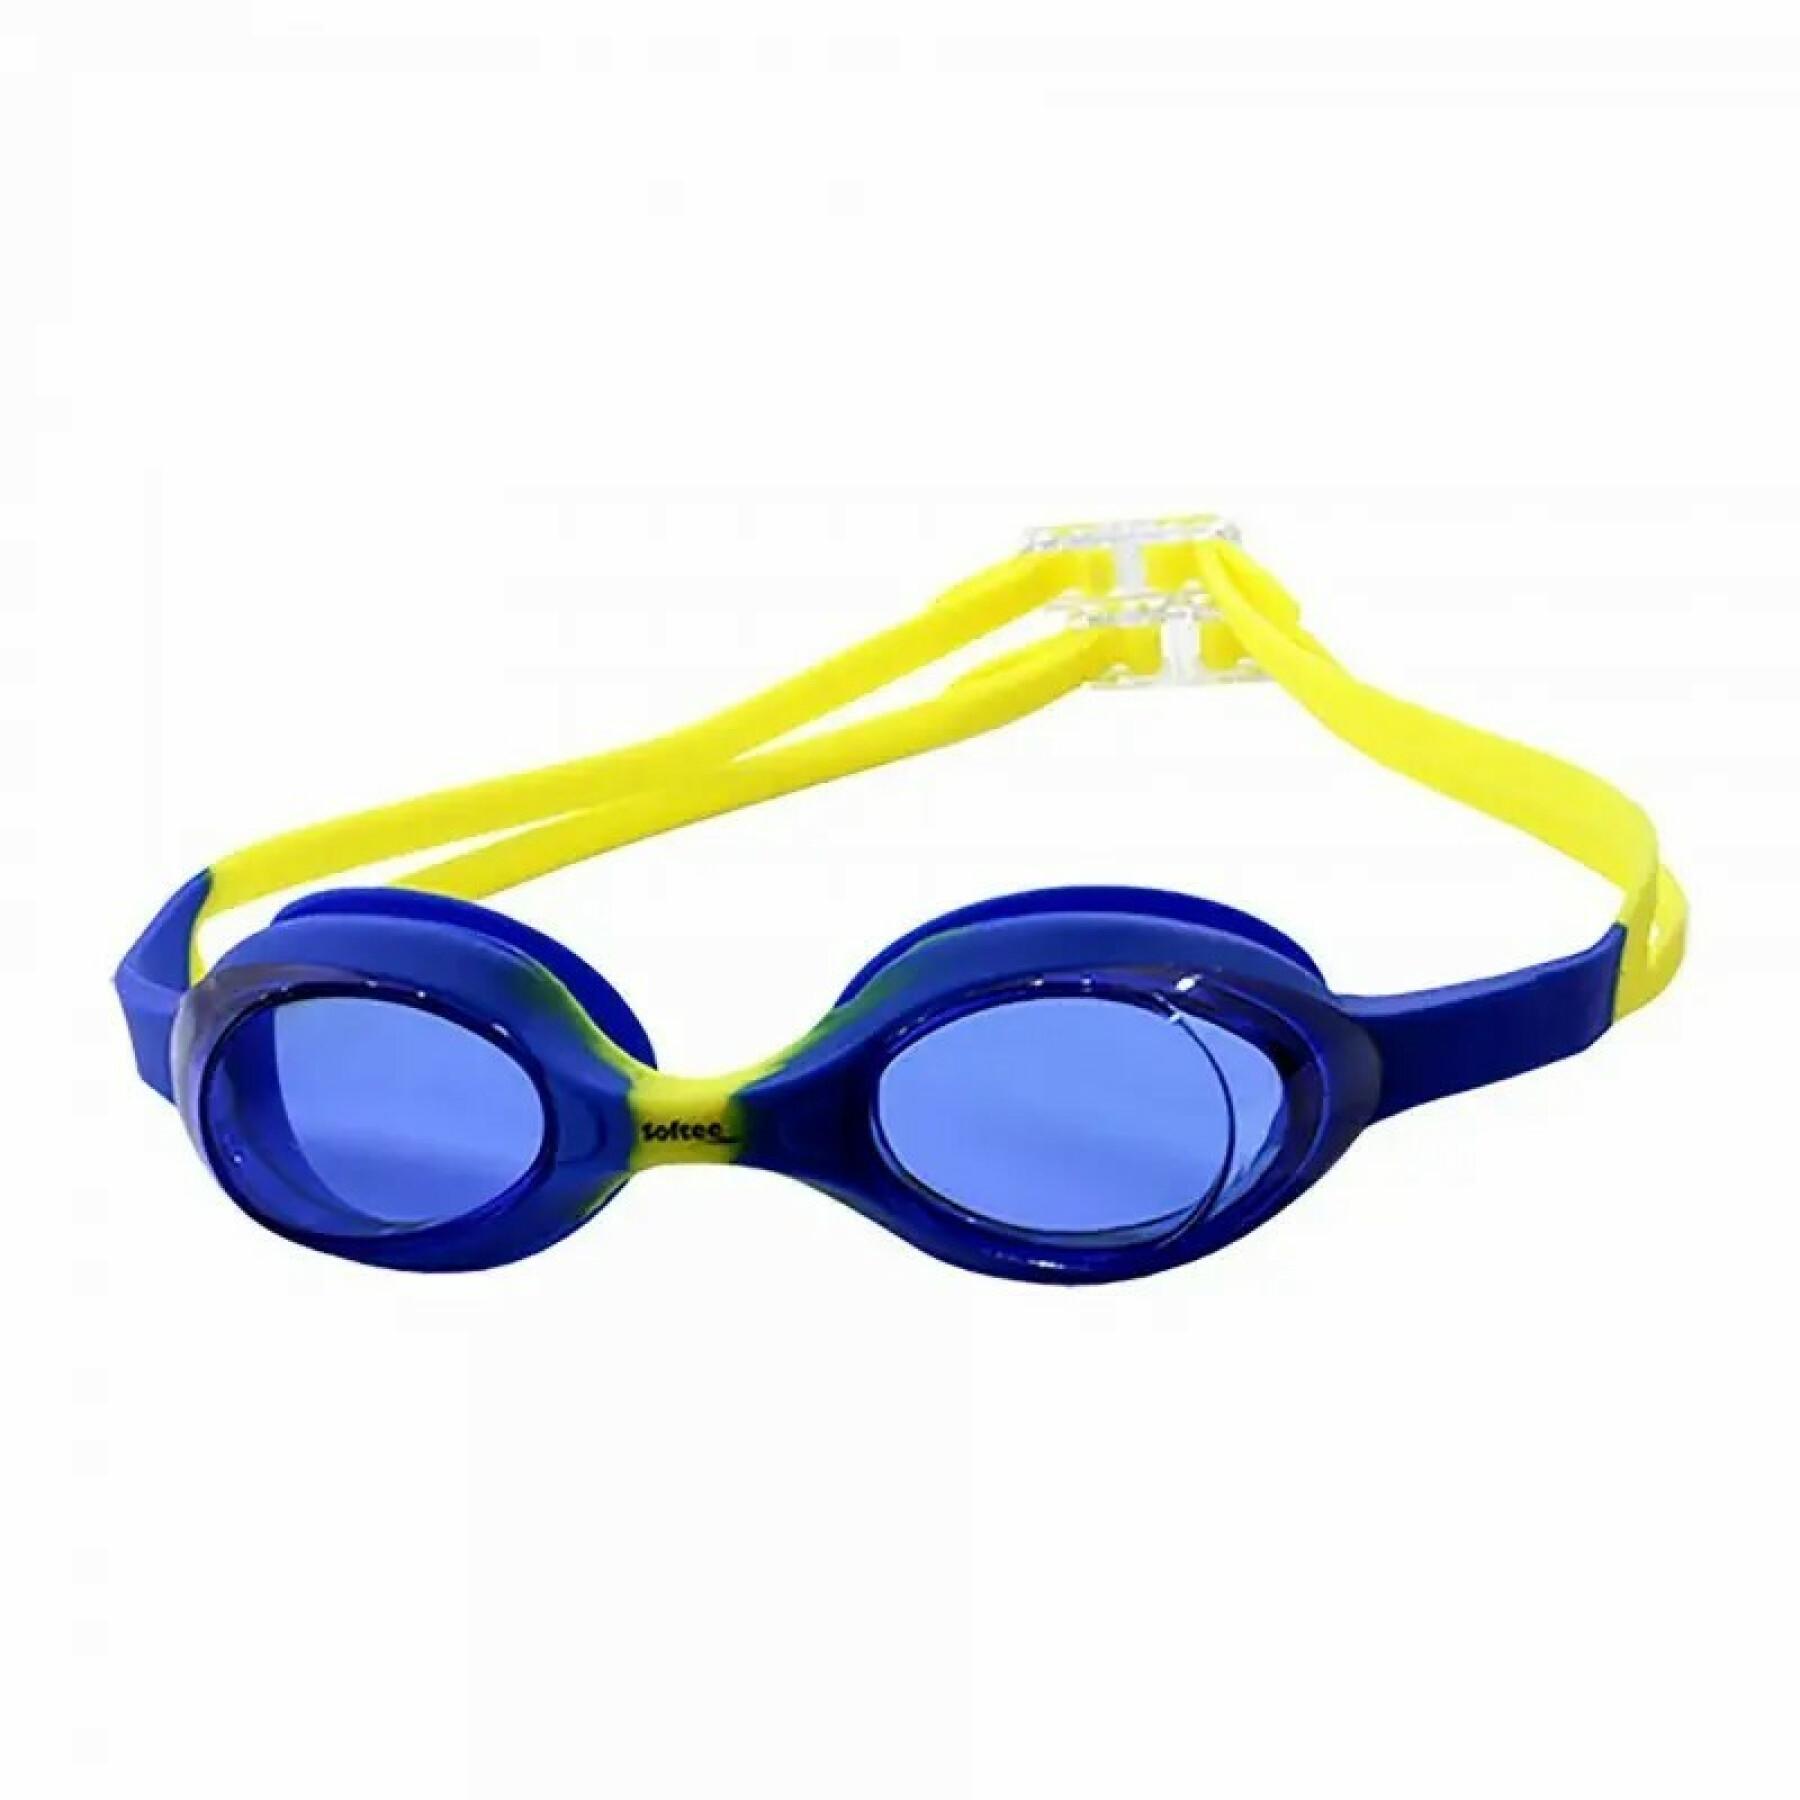 Gafas de natación para bebés Softee Alexis